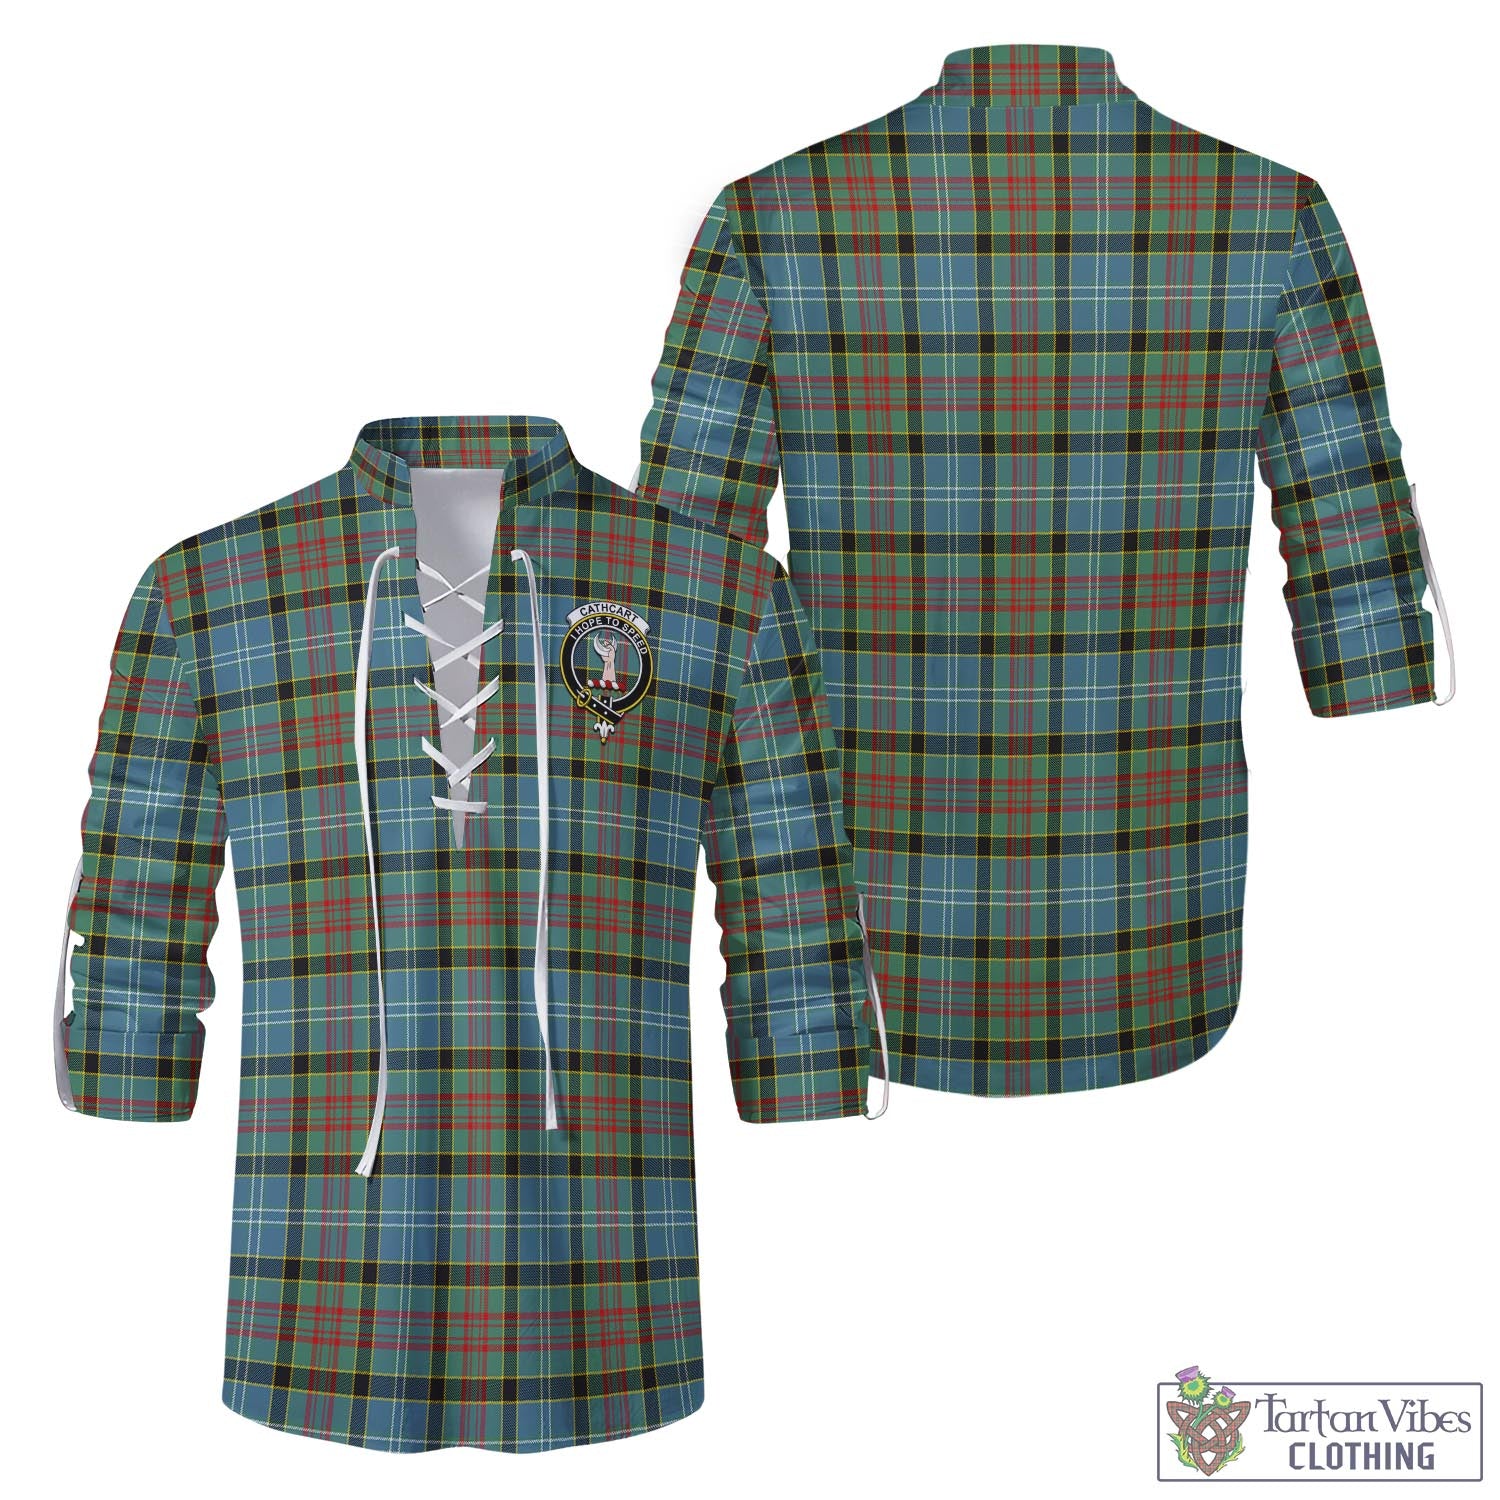 Tartan Vibes Clothing Cathcart Tartan Men's Scottish Traditional Jacobite Ghillie Kilt Shirt with Family Crest